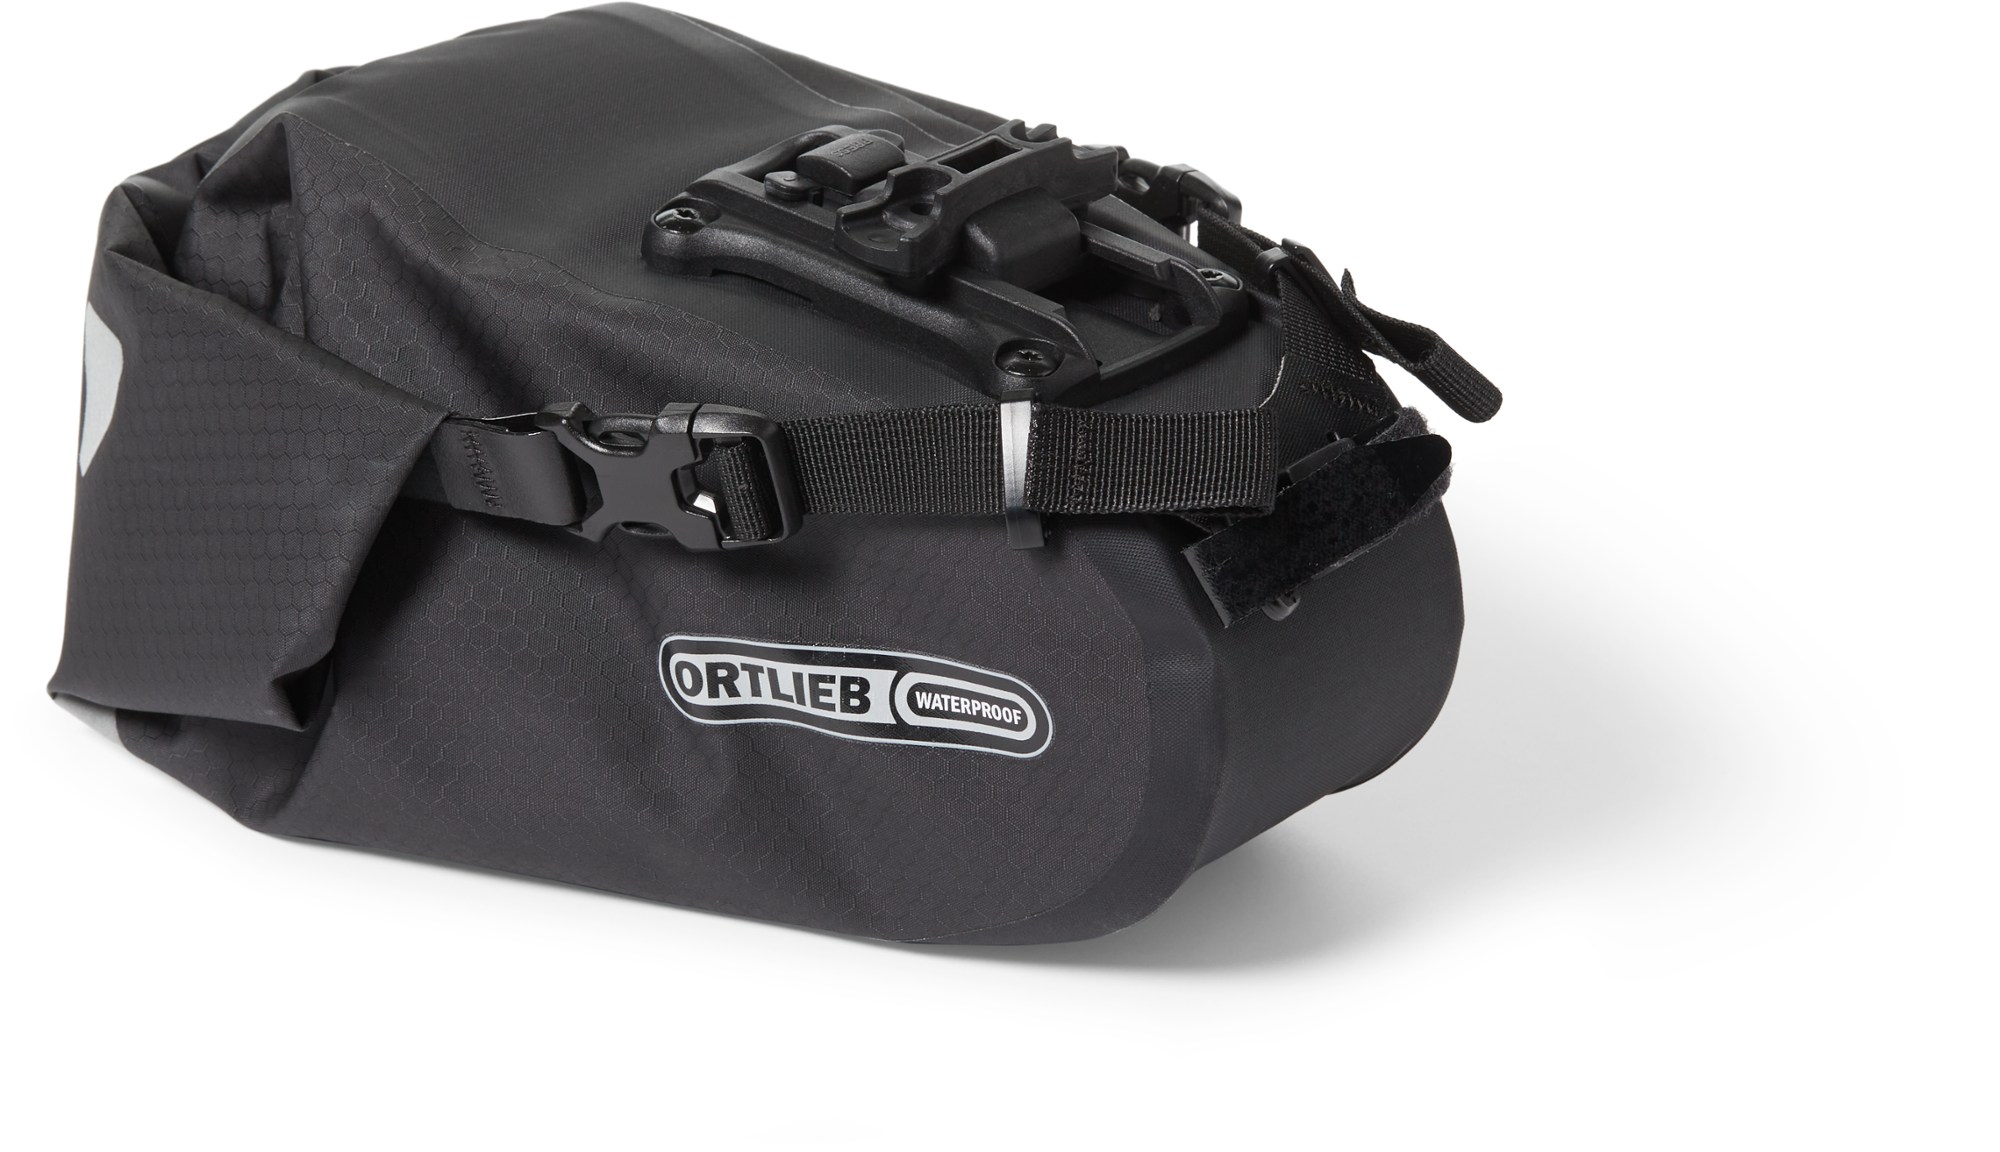 leather universal motorcycle bag kit cruiser tool bag fork barrel shape handlebar front saddle bag with two mounting straps Седельная сумка Two — 4,1 литра Ortlieb, черный